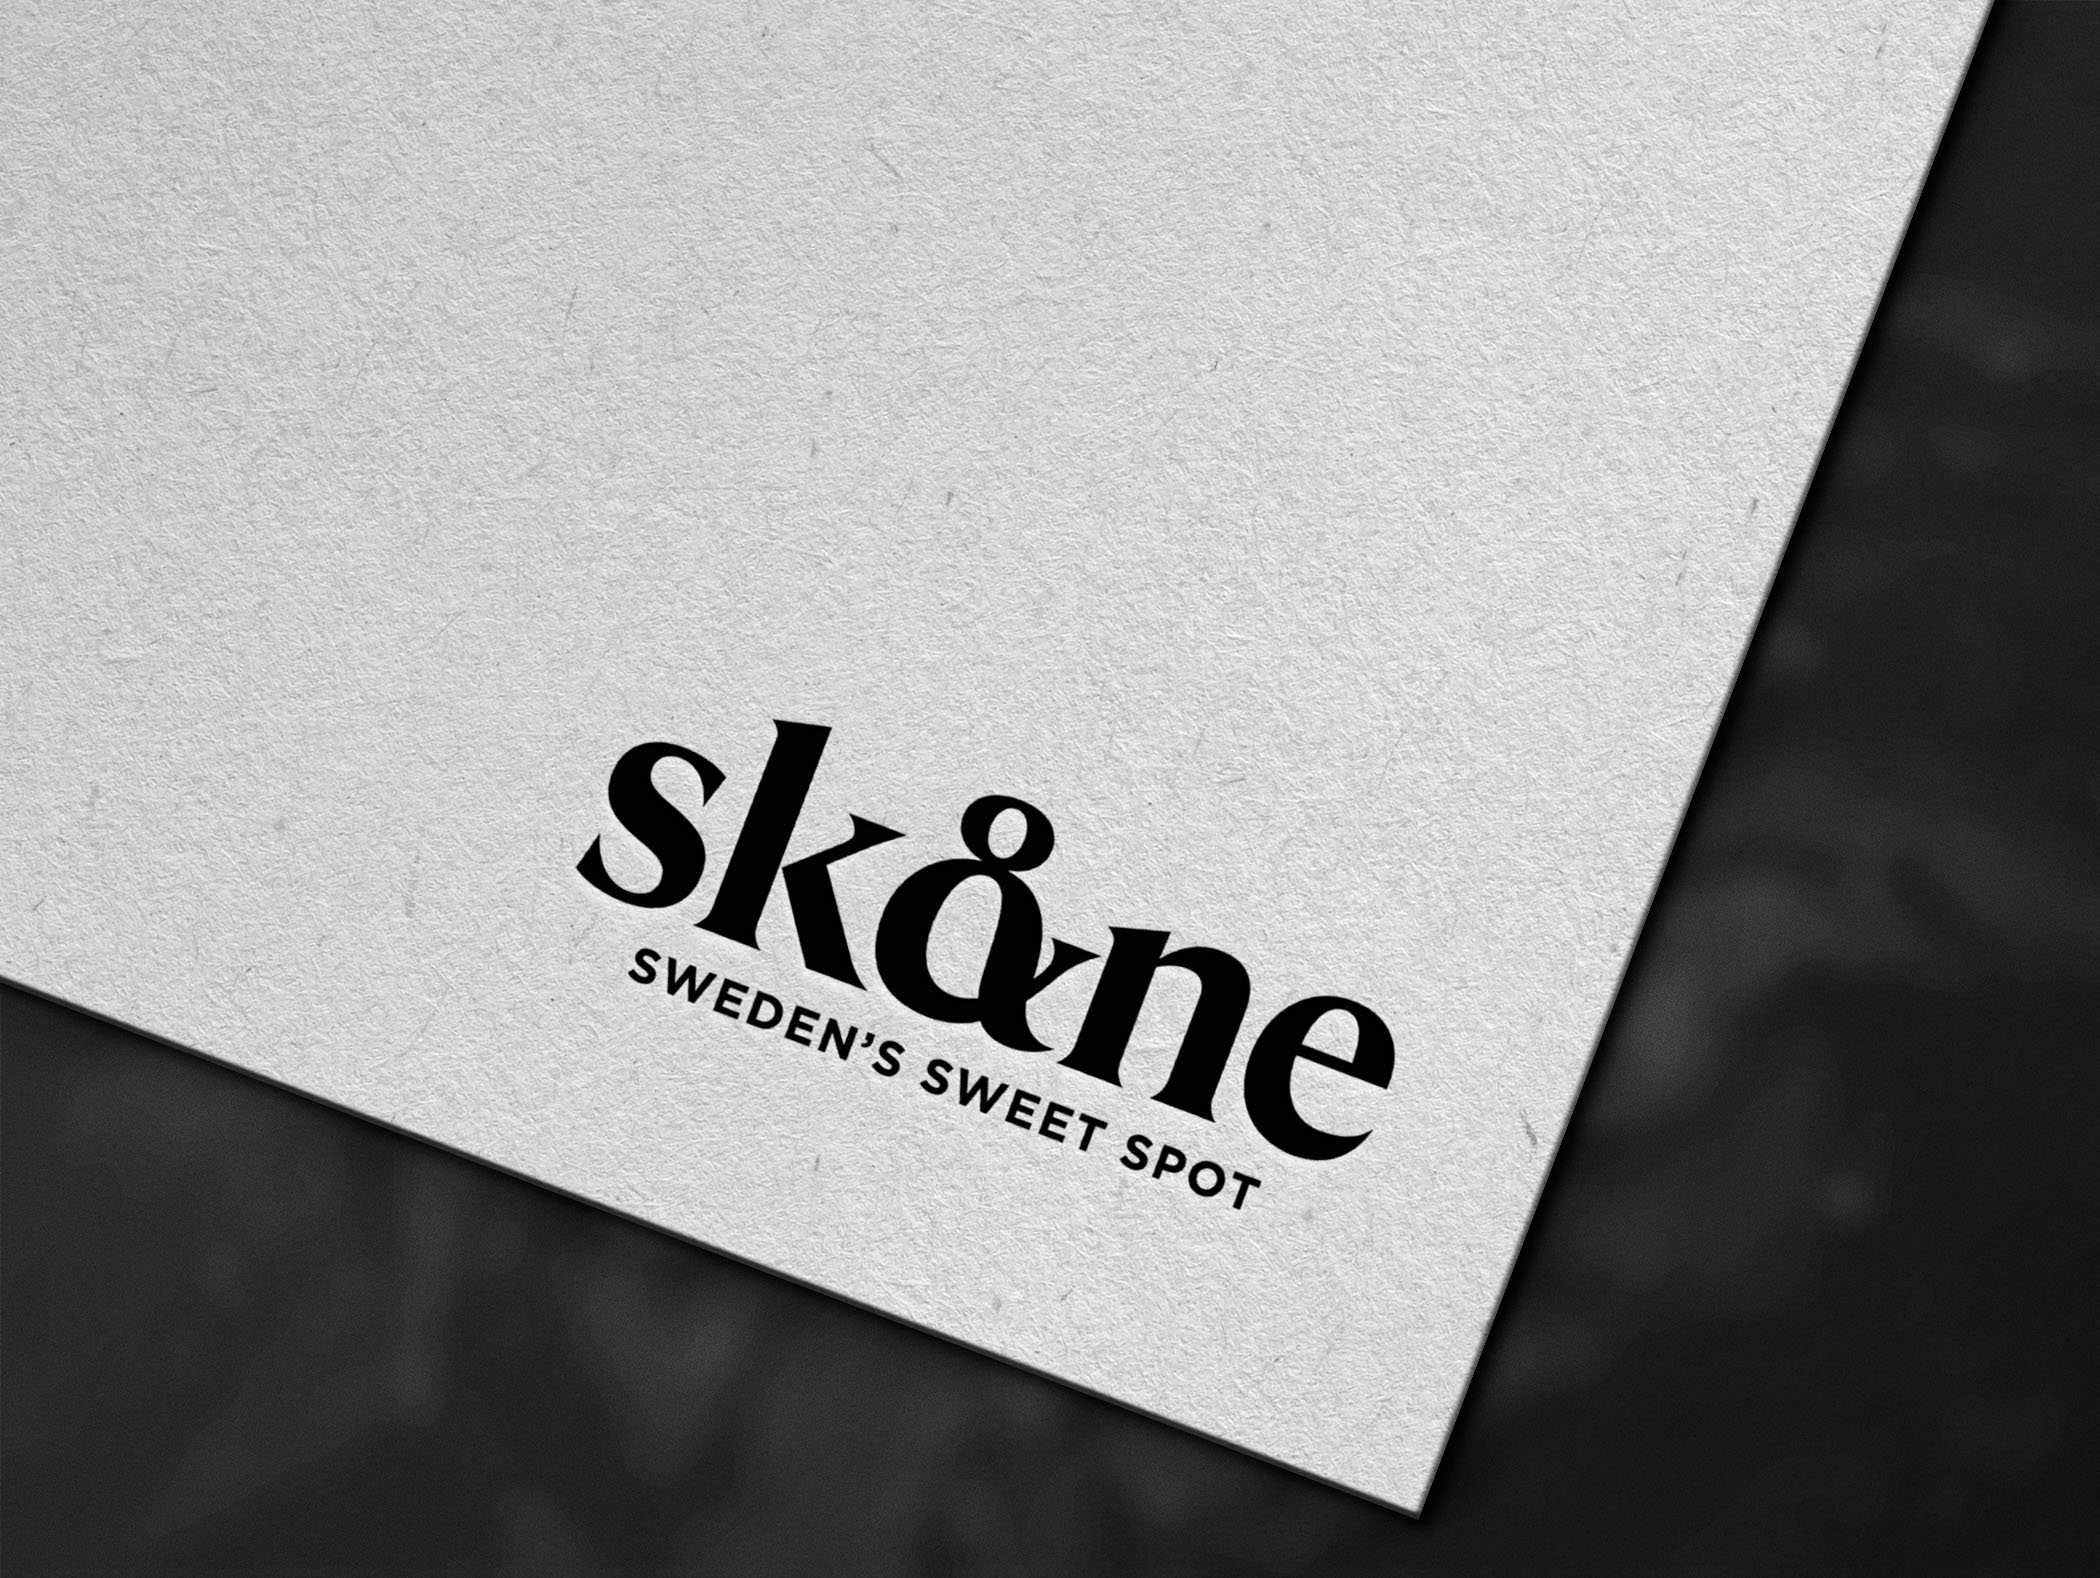 Skåne Sweden's Sweet Spot